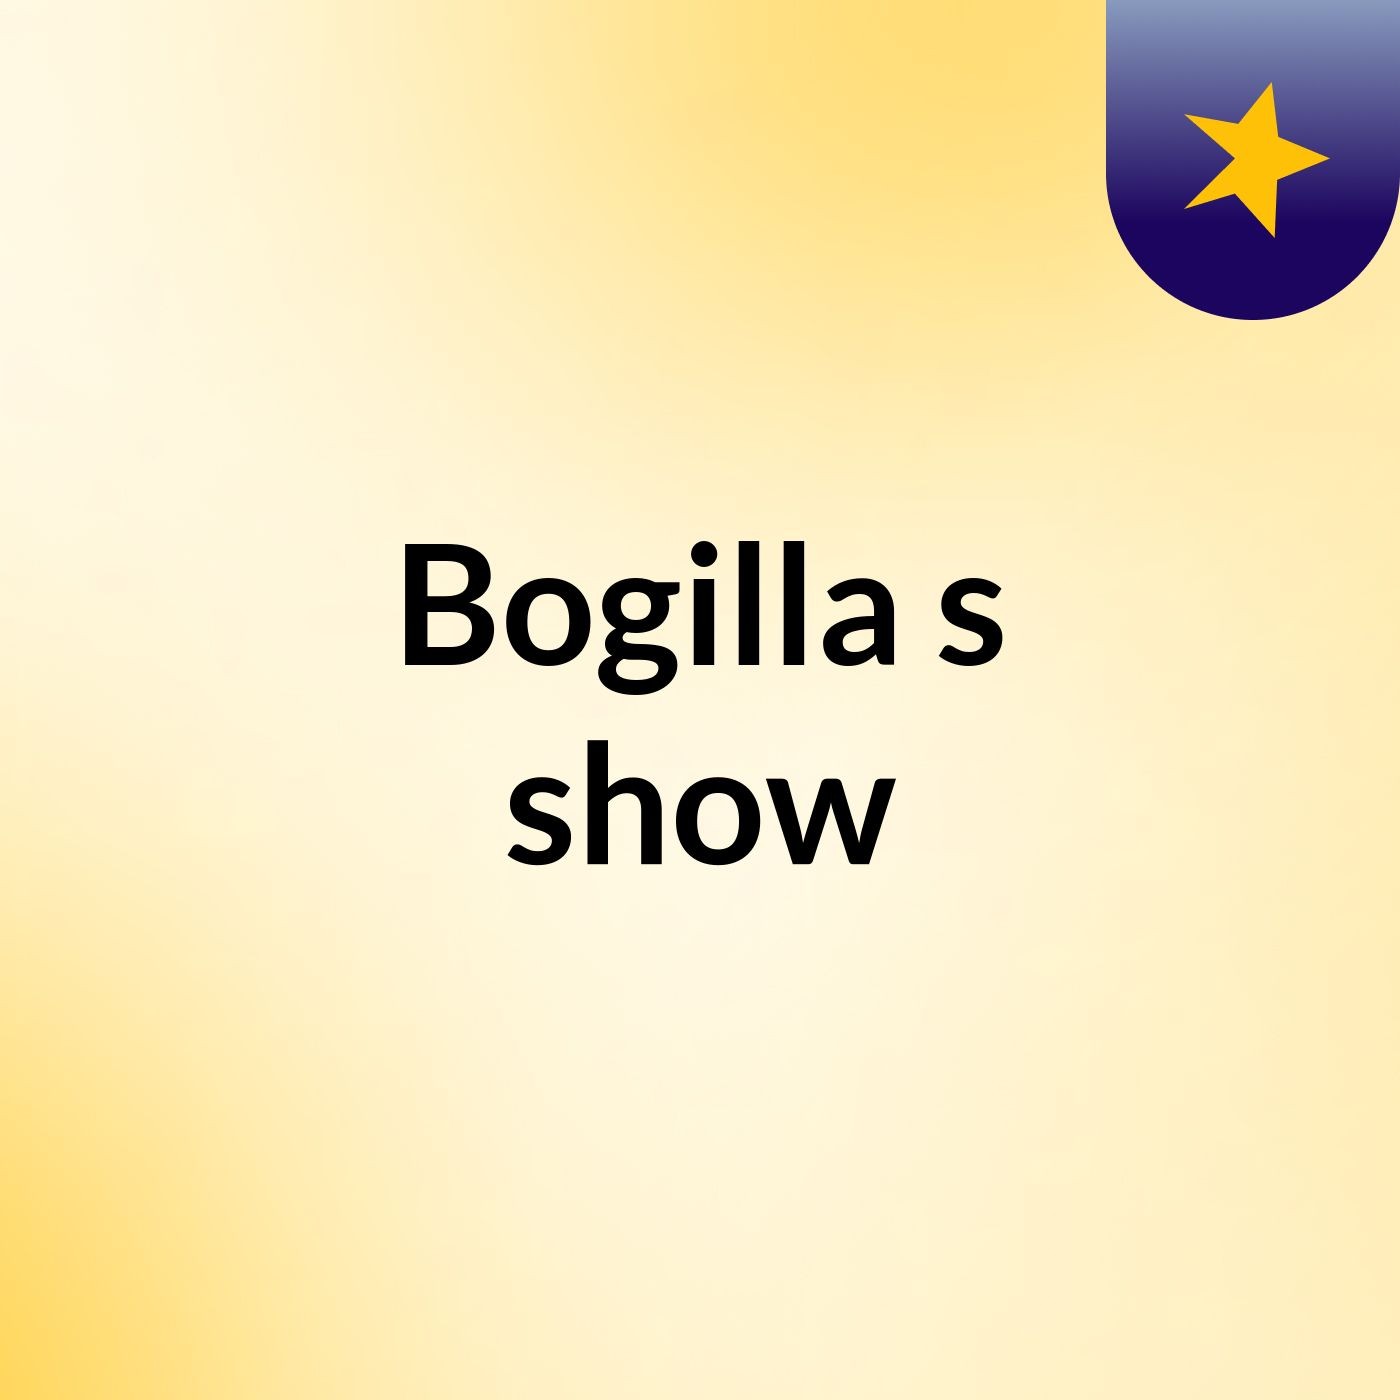 Bogilla's show